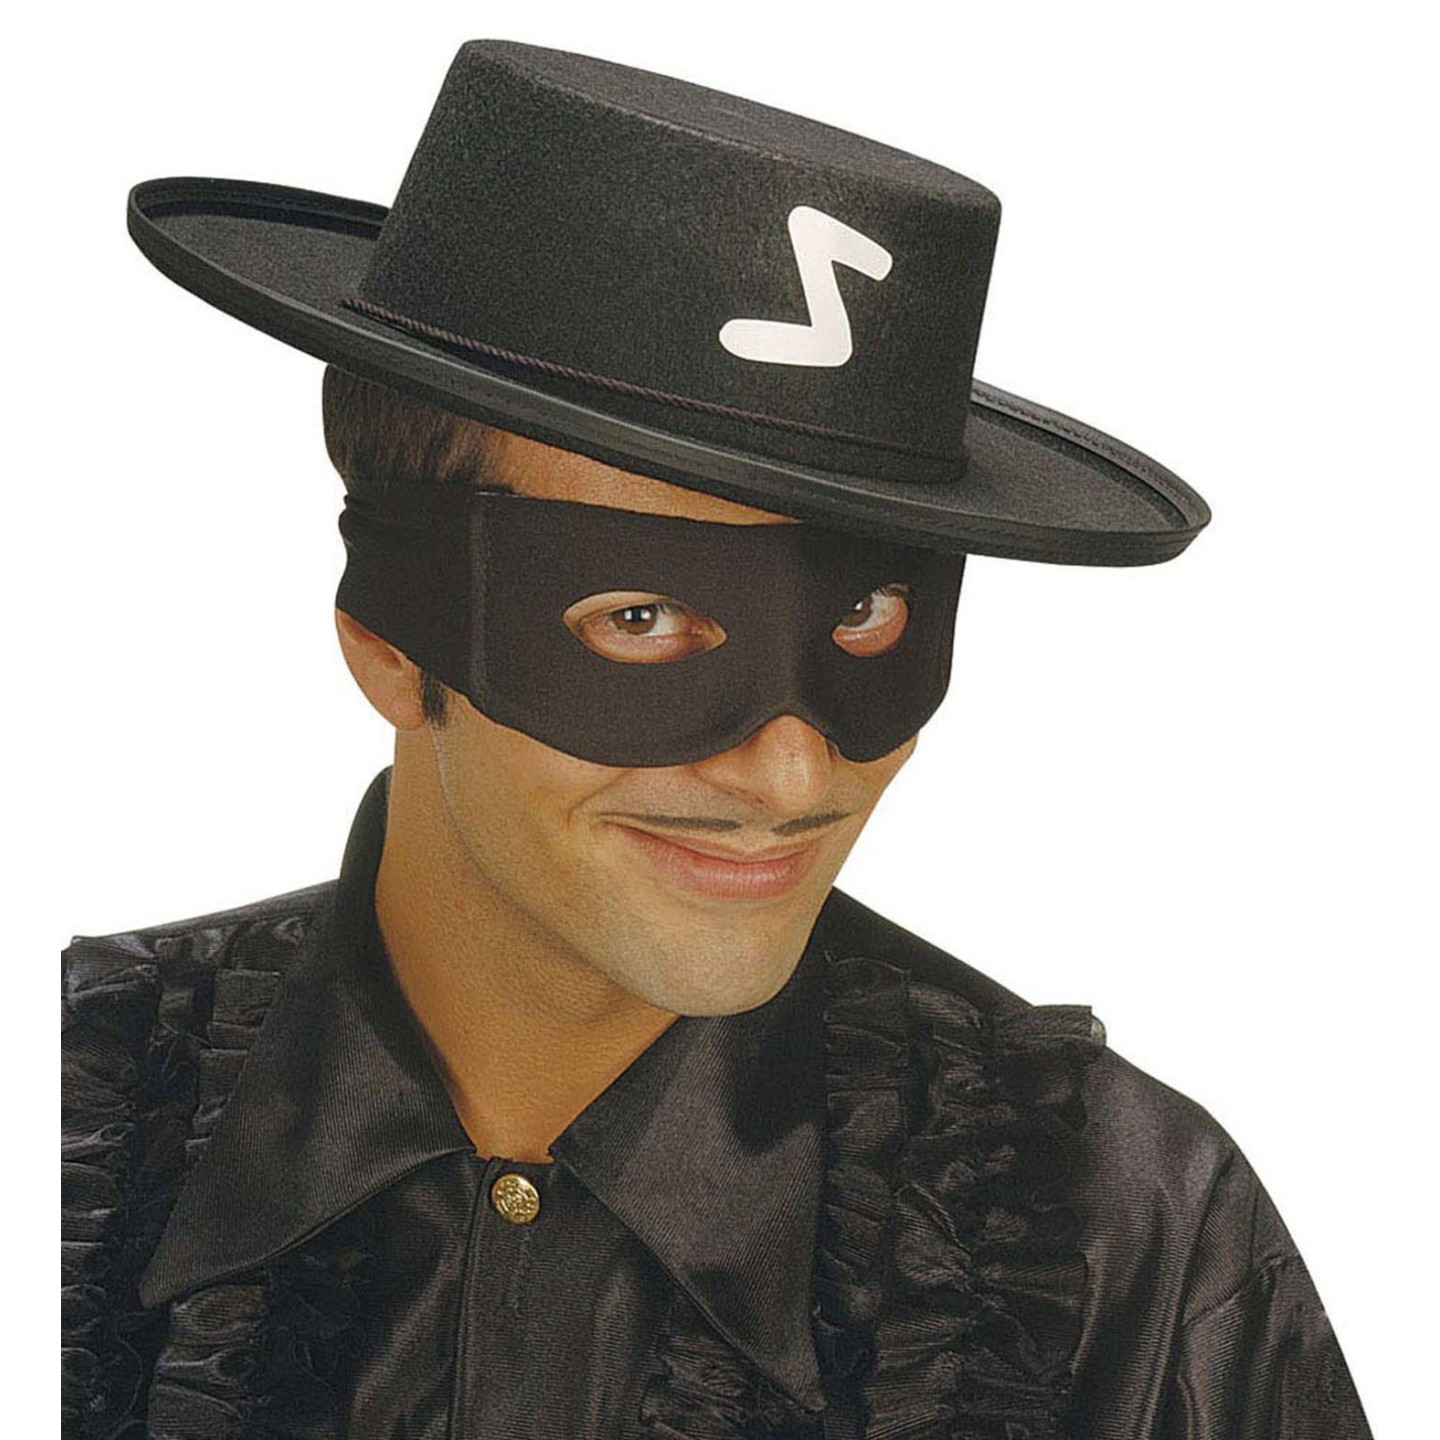 Michelangelo Visa lamp Goedkoop Zorro masker kopen ? | Jokershop feestwinkel